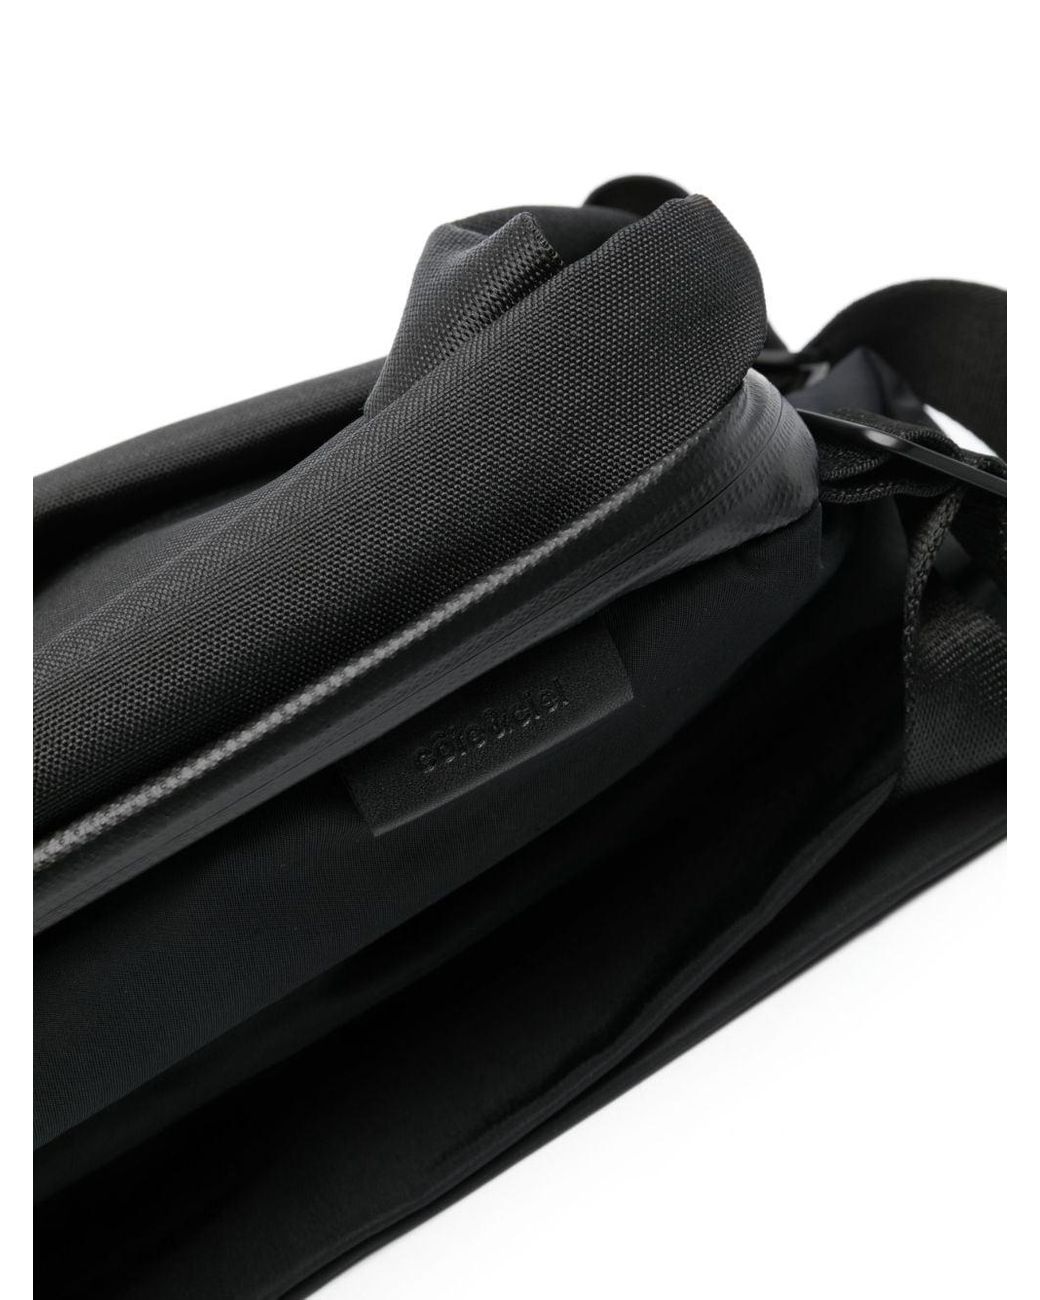 Côte&Ciel Riss Memorytech Messenger Bag in Black | Lyst